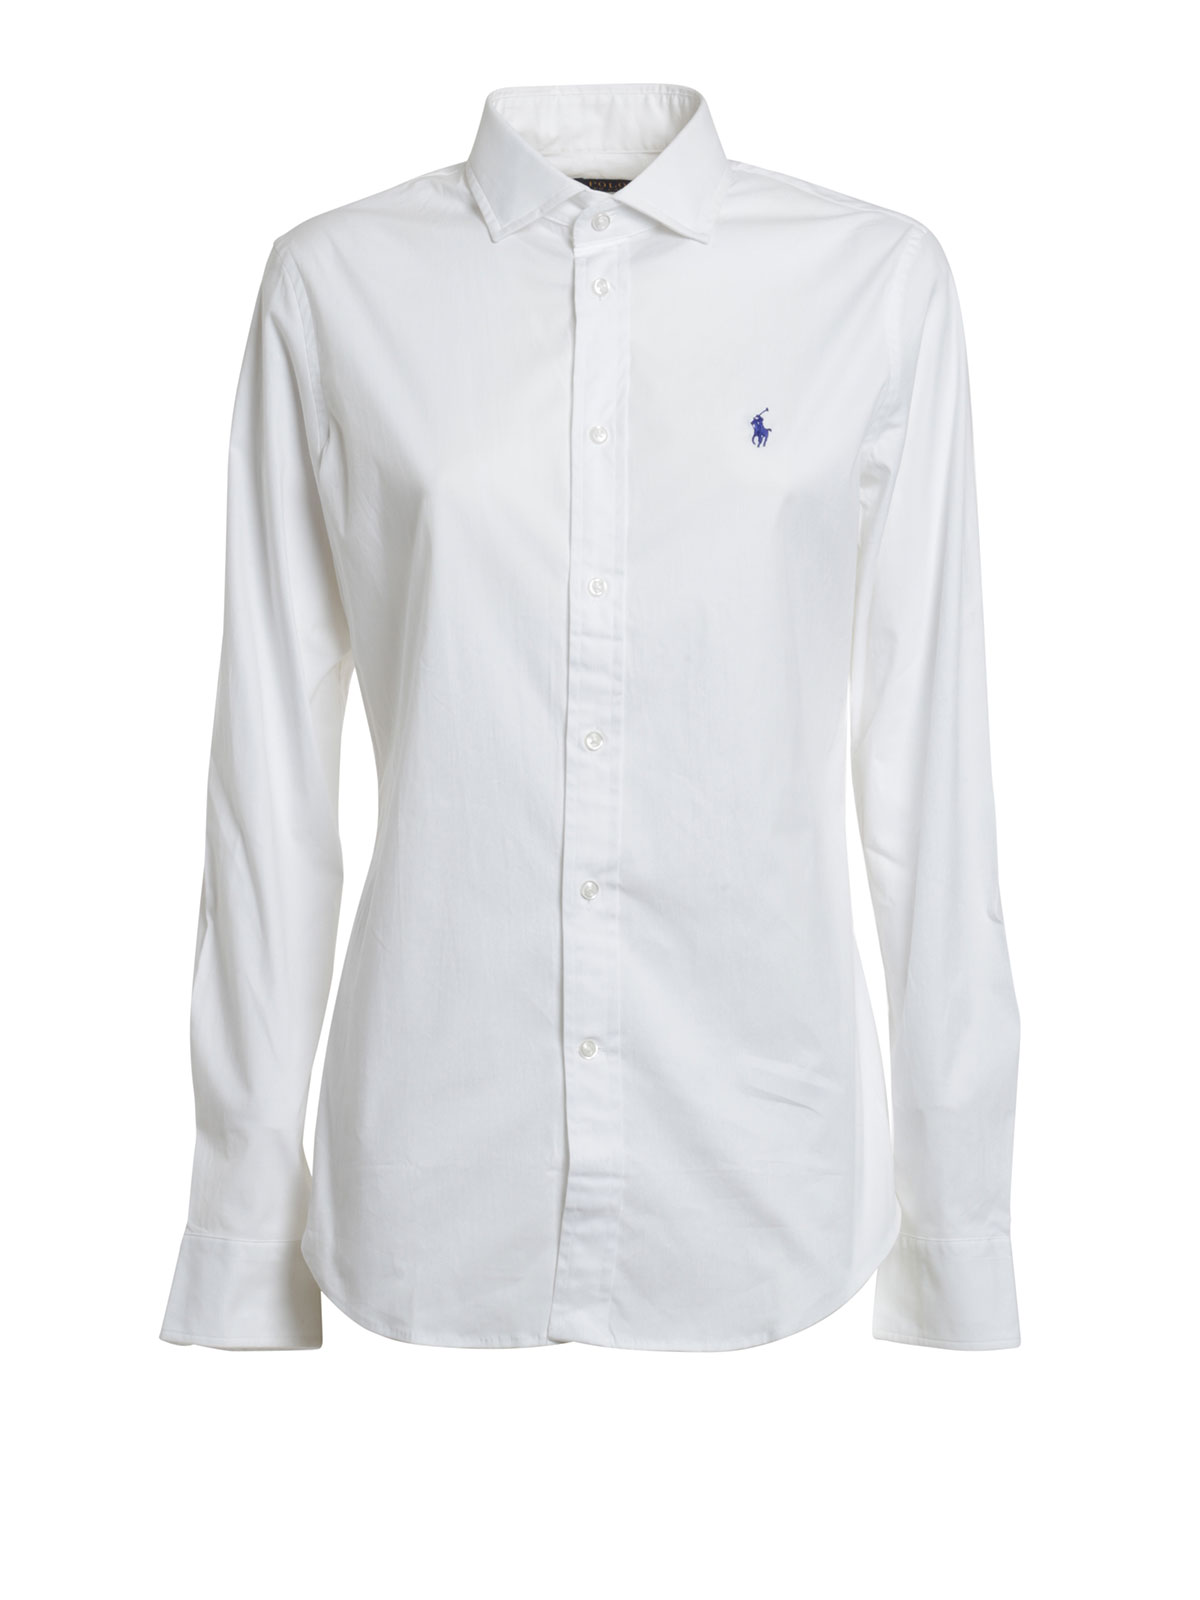 Camisas Polo - Camisa Blanca Mujer - V33IG270BG207B1426